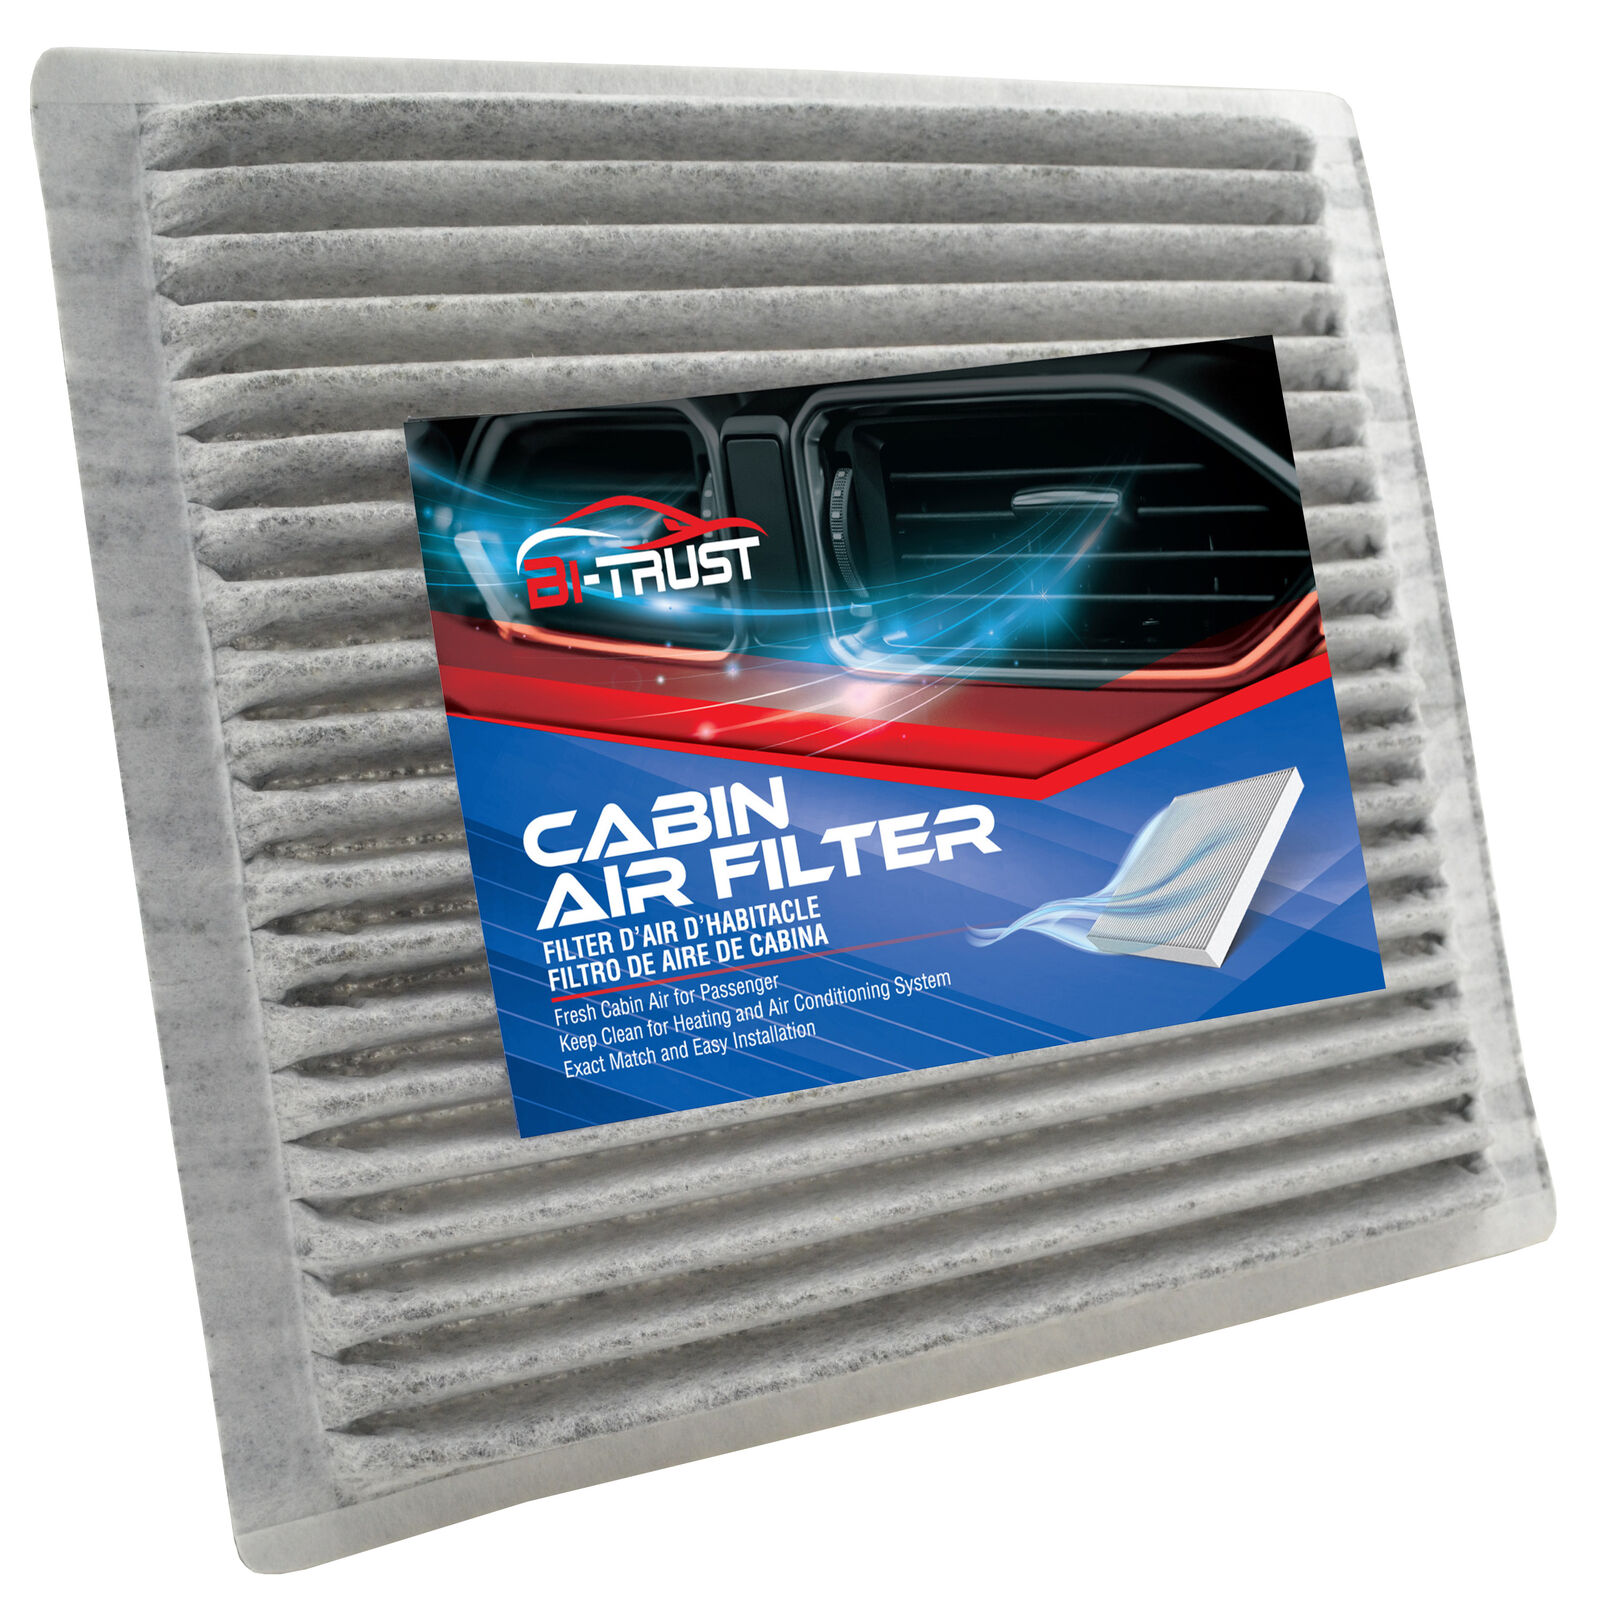 Carbon Cabin Air Filter for Lexus RX300 1999-2003 V6 3.0L 87139-48020